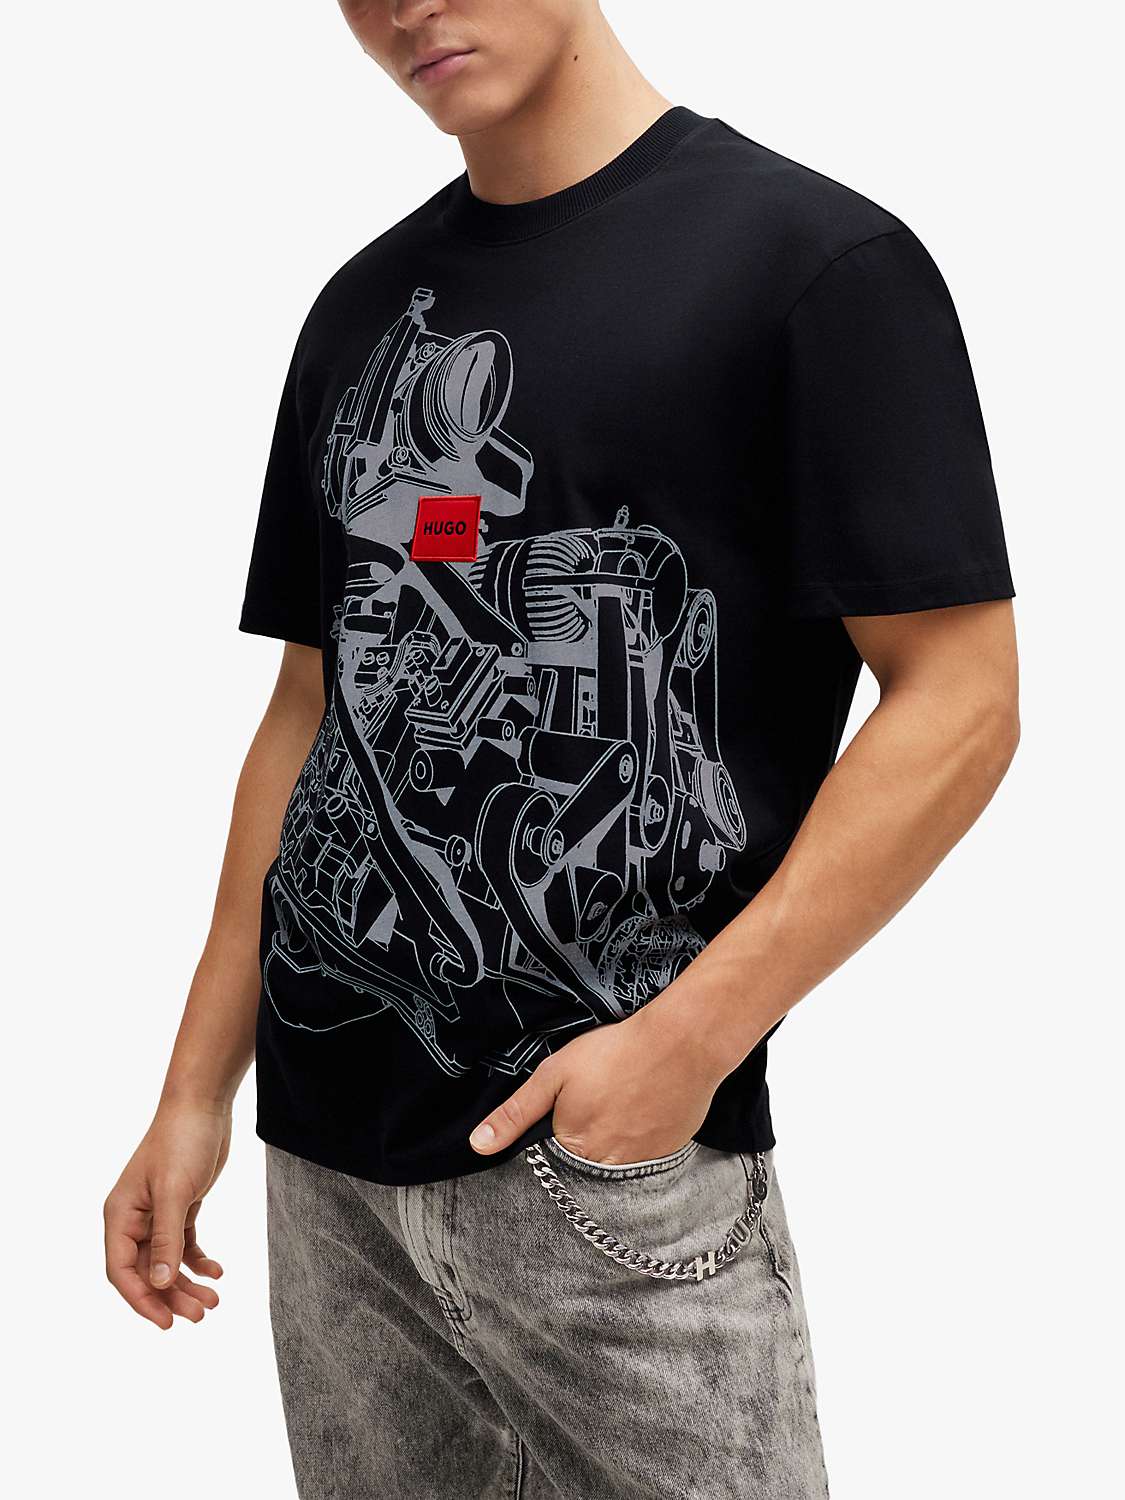 Buy HUGO Dacifico Short Sleeve T-Shirt, Black/Multi Online at johnlewis.com